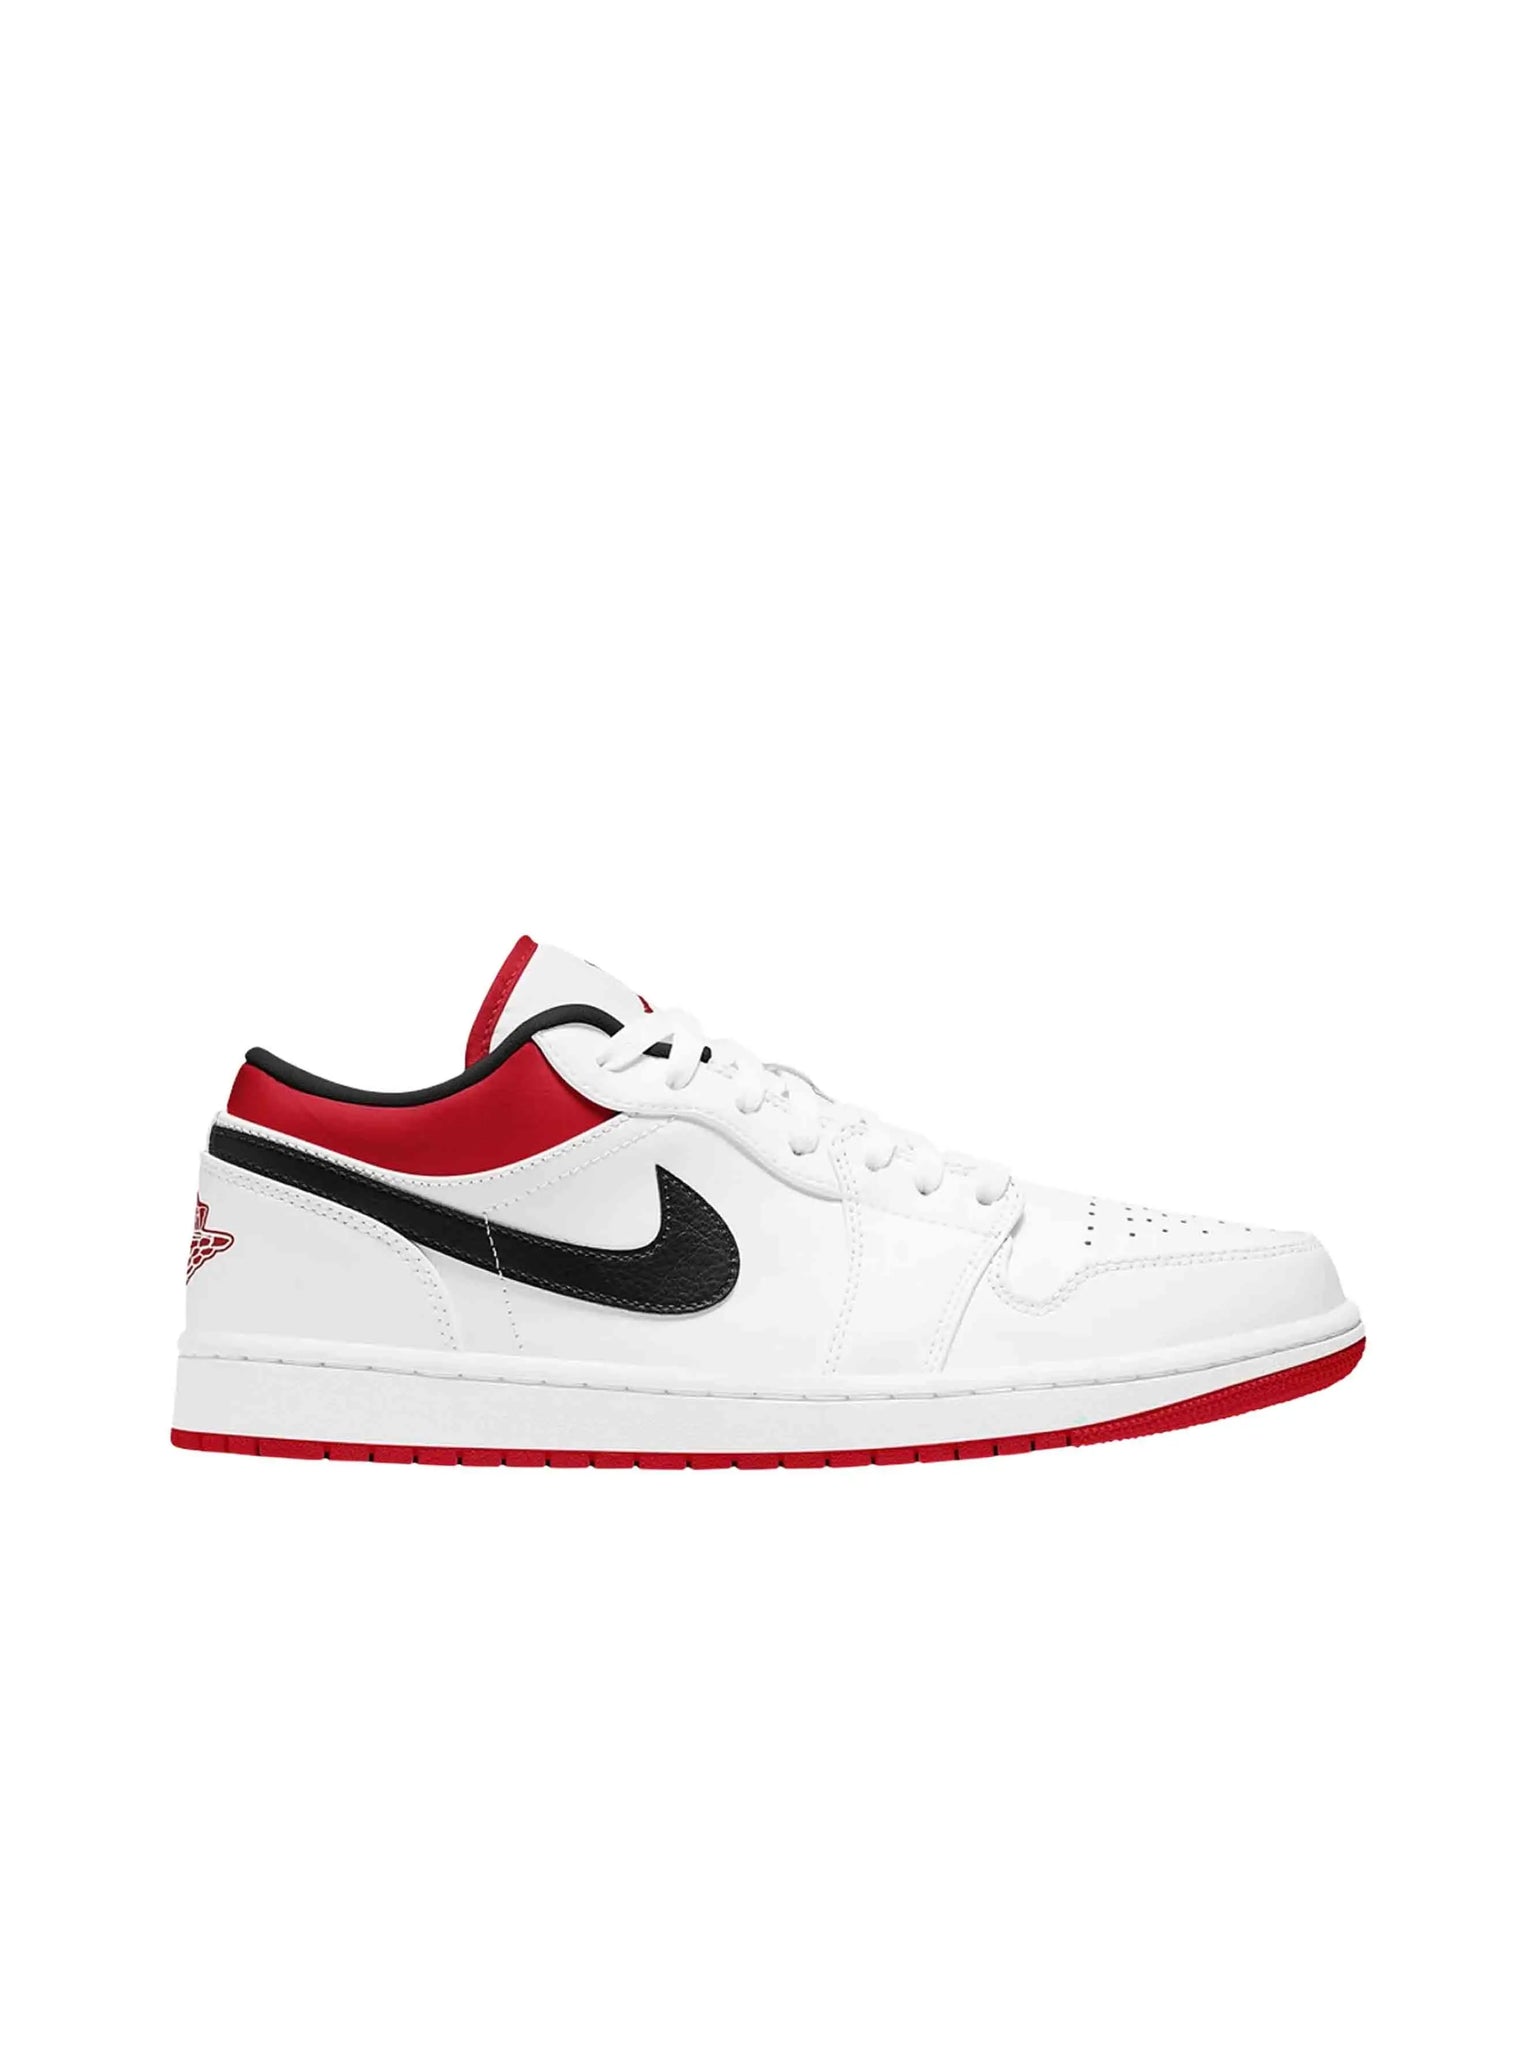 Nike Air Jordan 1 Low White University Red Black Prior